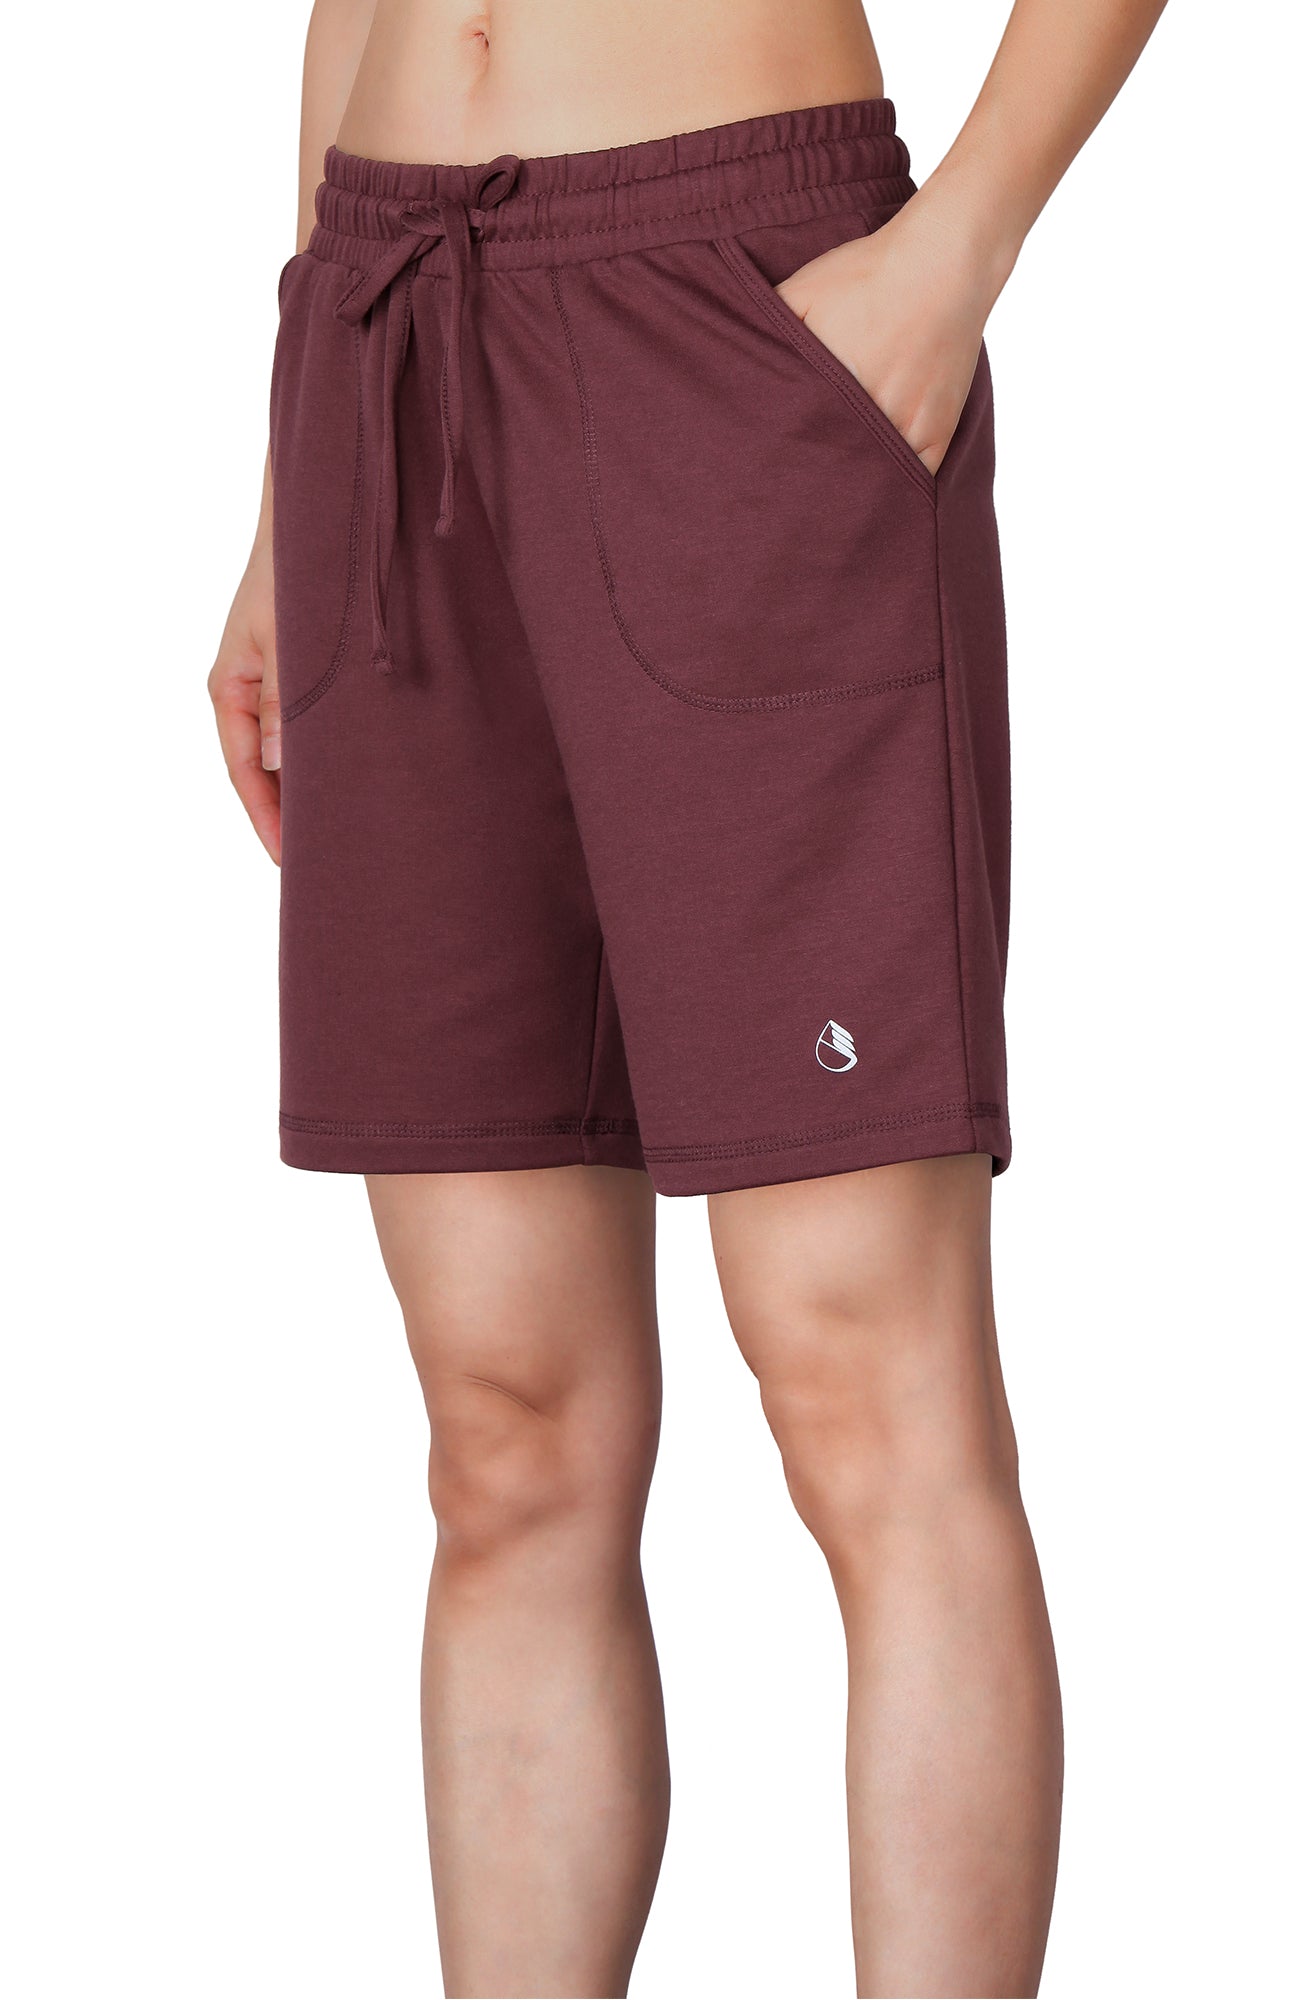 ASEIDFNSA High Waisted Yoga Shorts Pajamas Shorts for Women